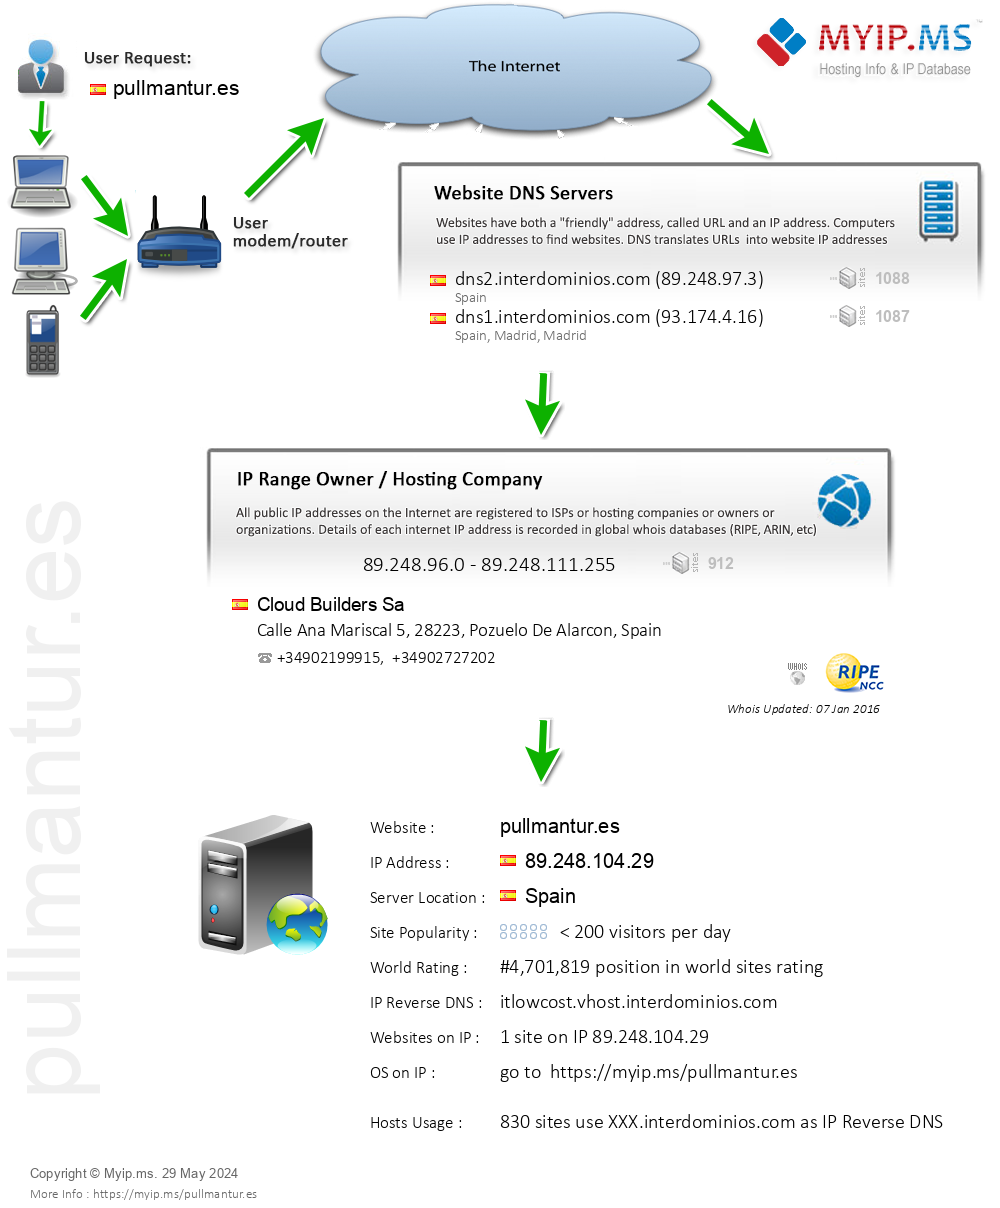 Pullmantur.es - Website Hosting Visual IP Diagram